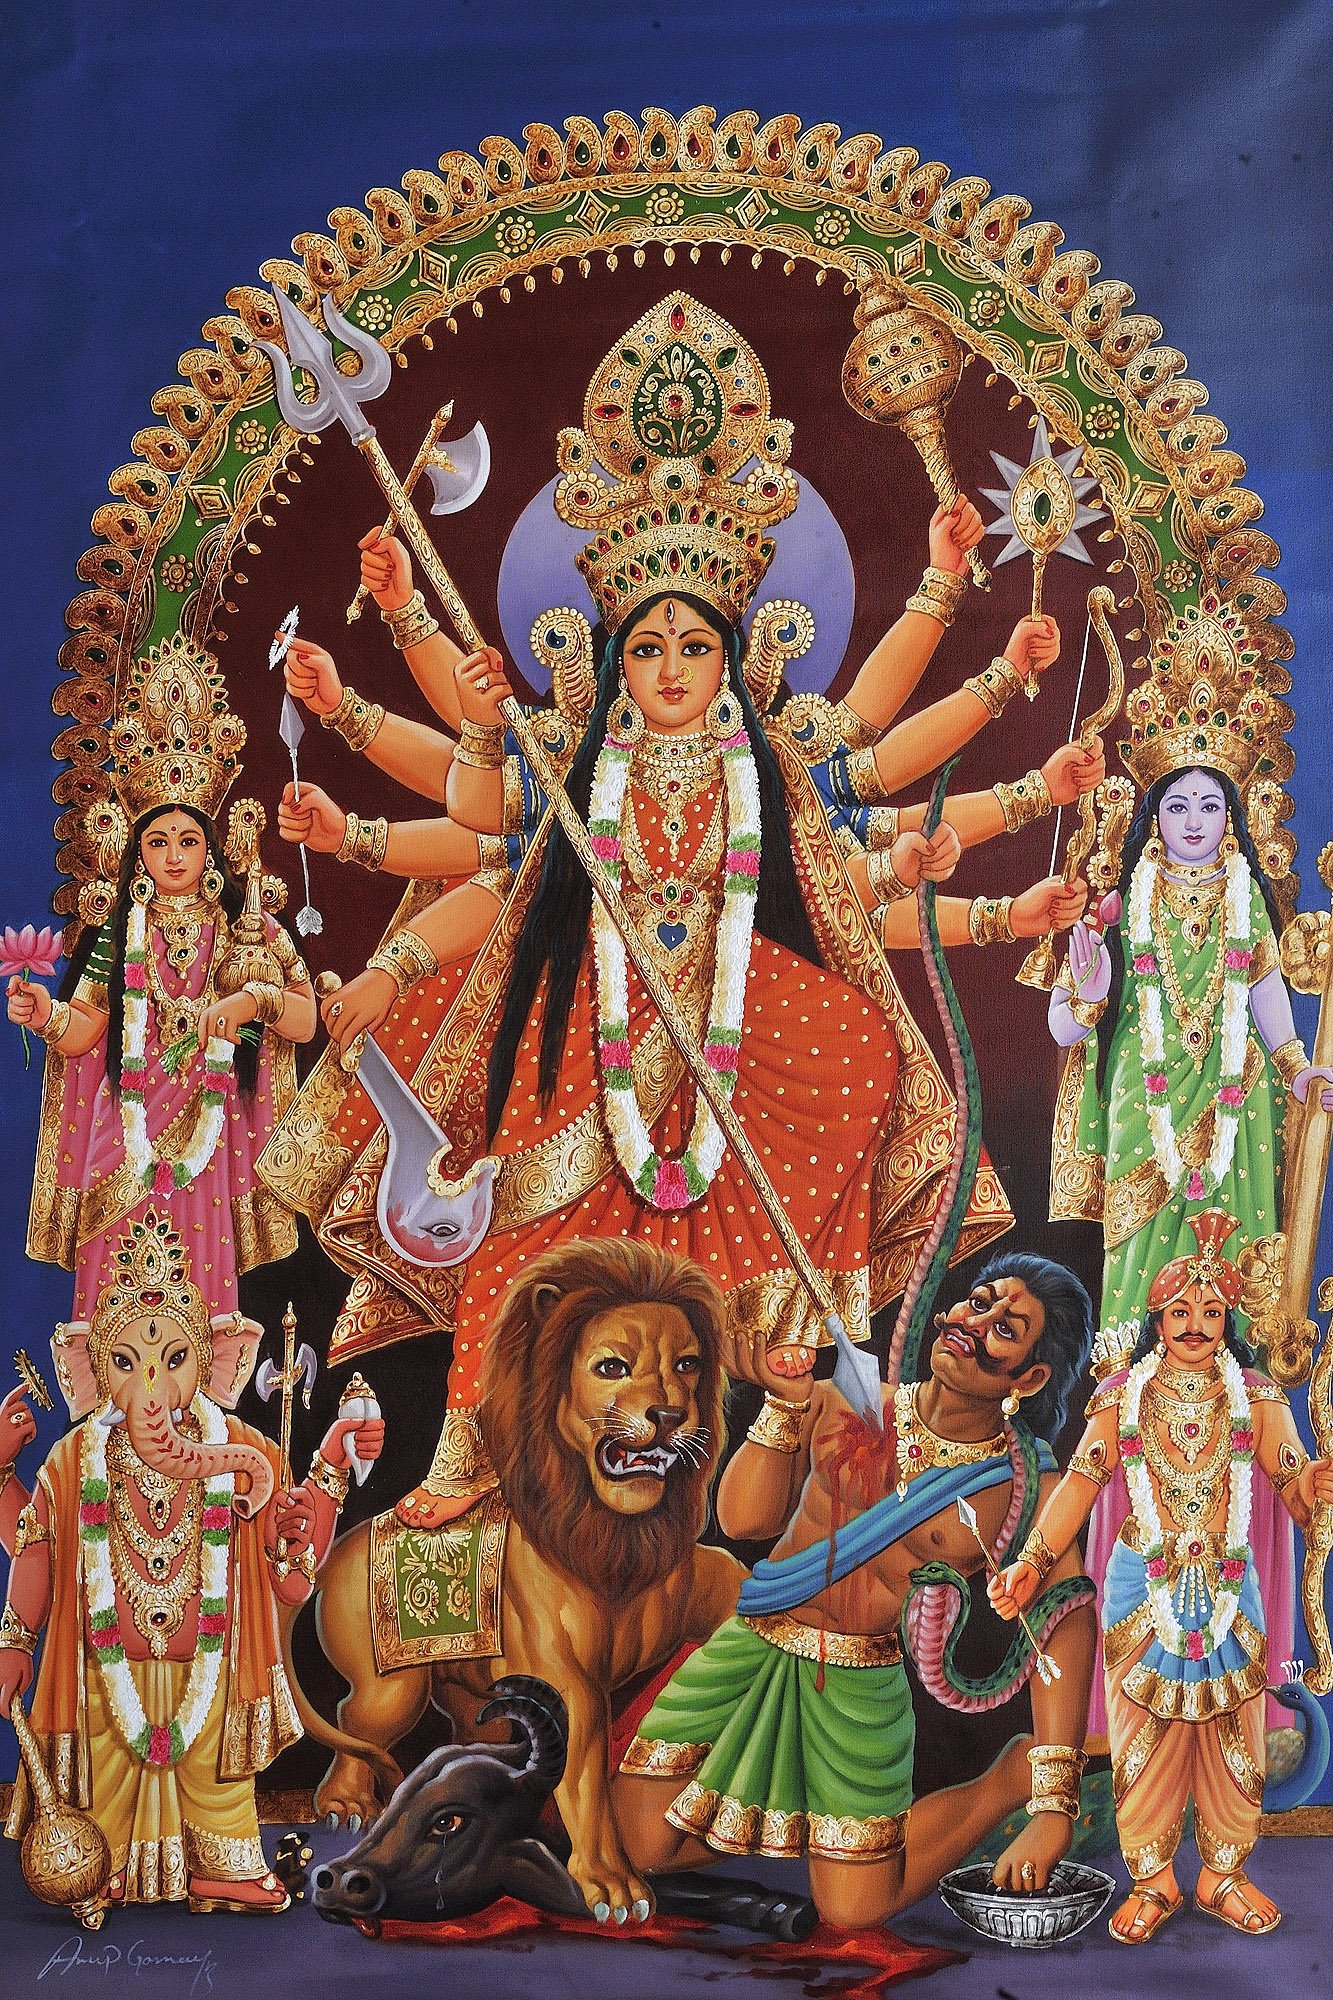 Brass Durga Mata Mahishasura Mardini Idol